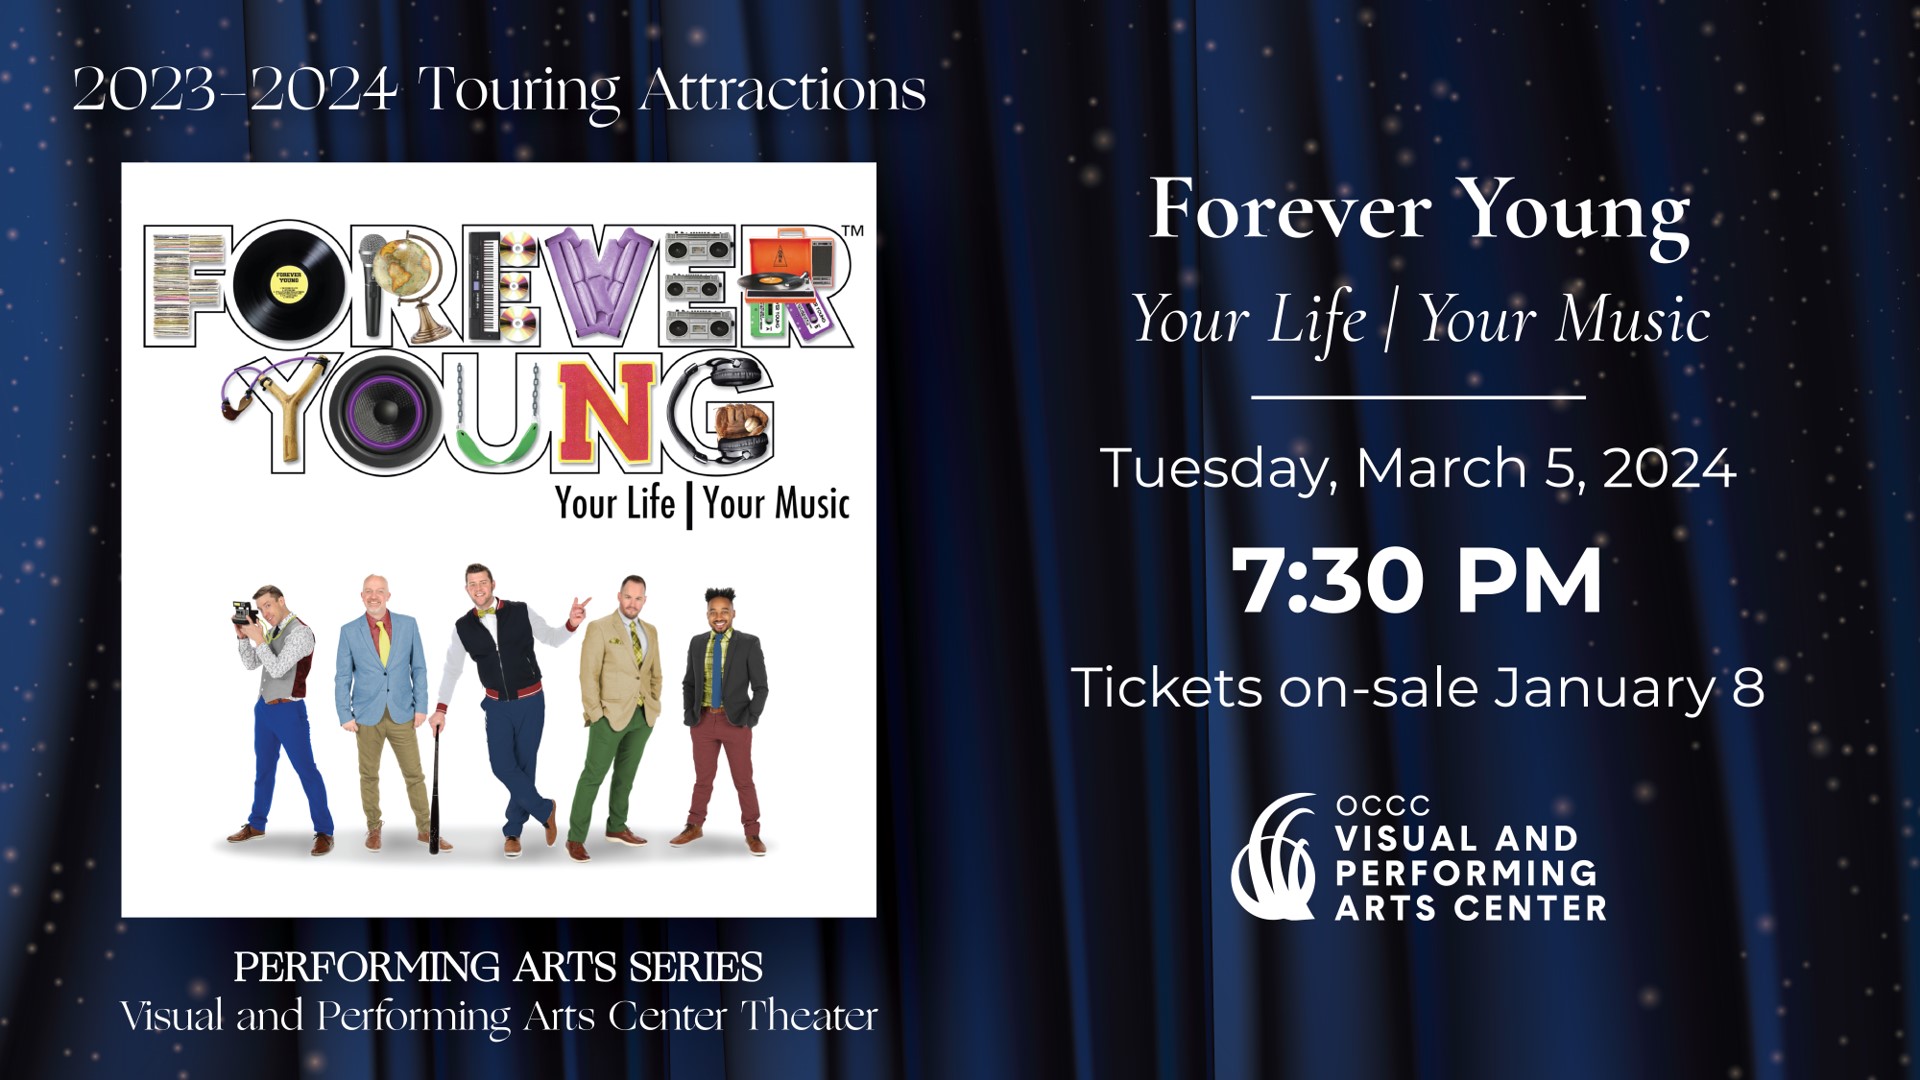 Joshua Aaron Tour 2024  : An Unforgettable Musical Journey